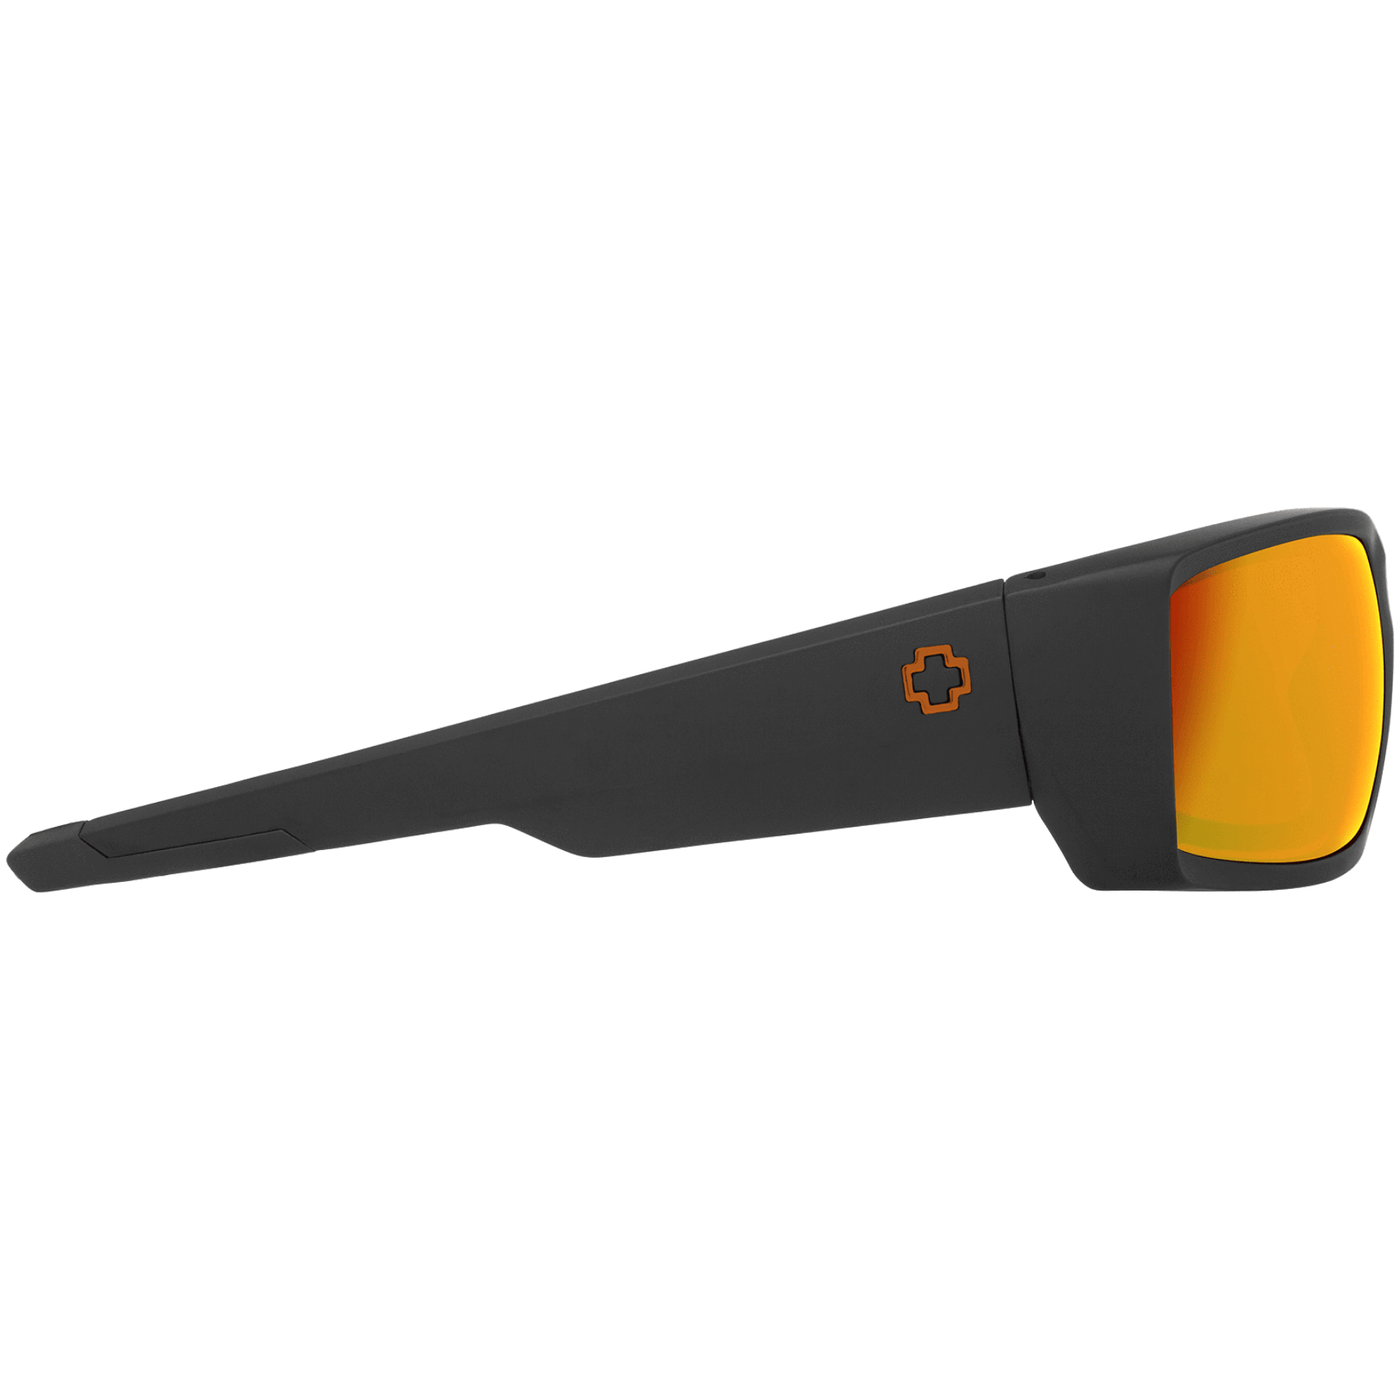 SPY GENERAL Dale Earnhardt JR Sunglasses - Orange 8Lines Shop - Fast Shipping